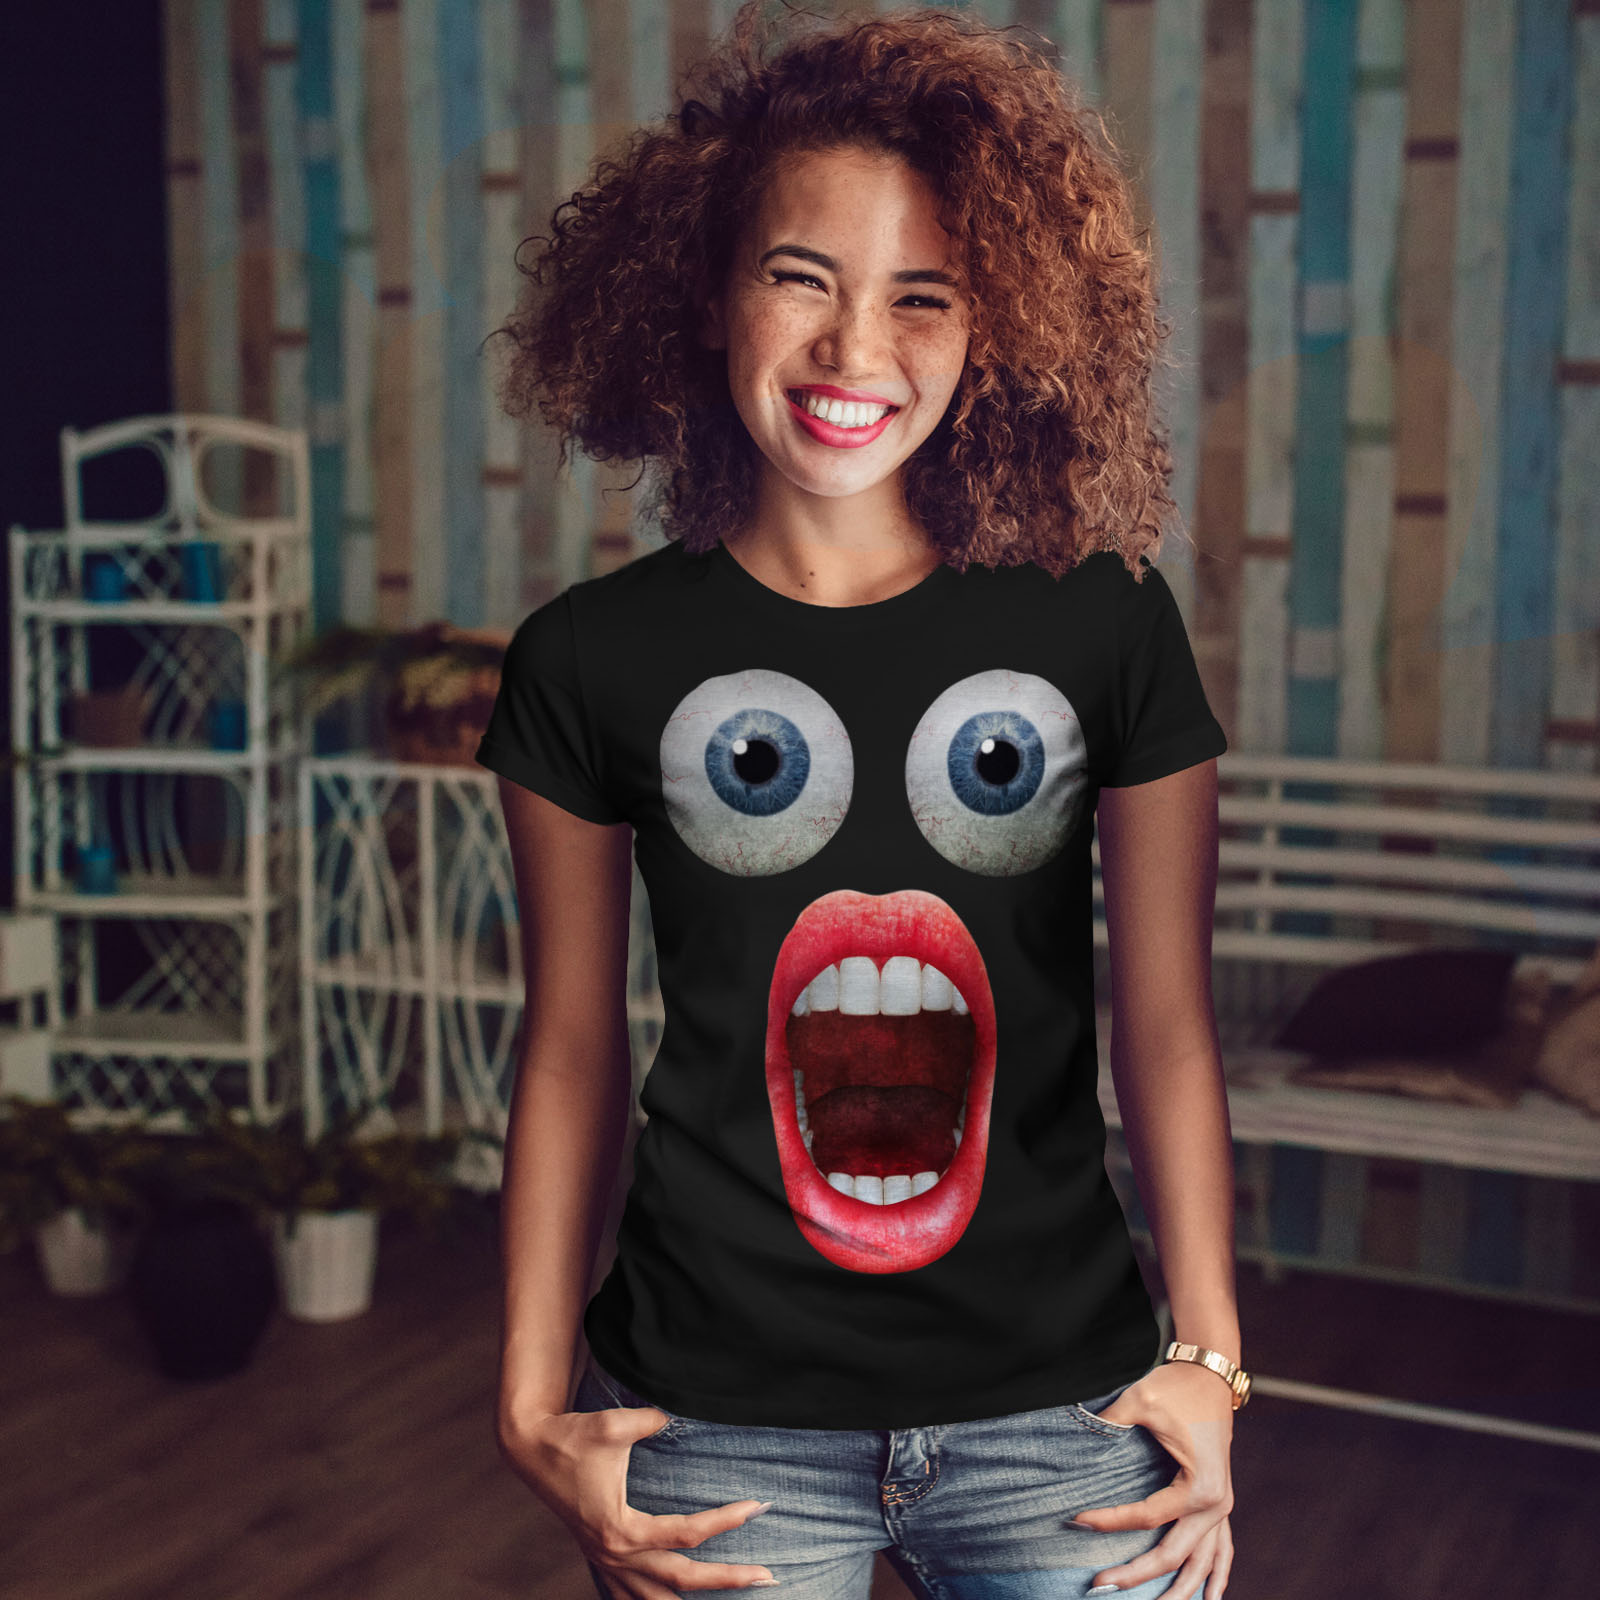 Wellcoda surprise Face Cool T-shirt femme Choquant Casual Design Imprimé Tee